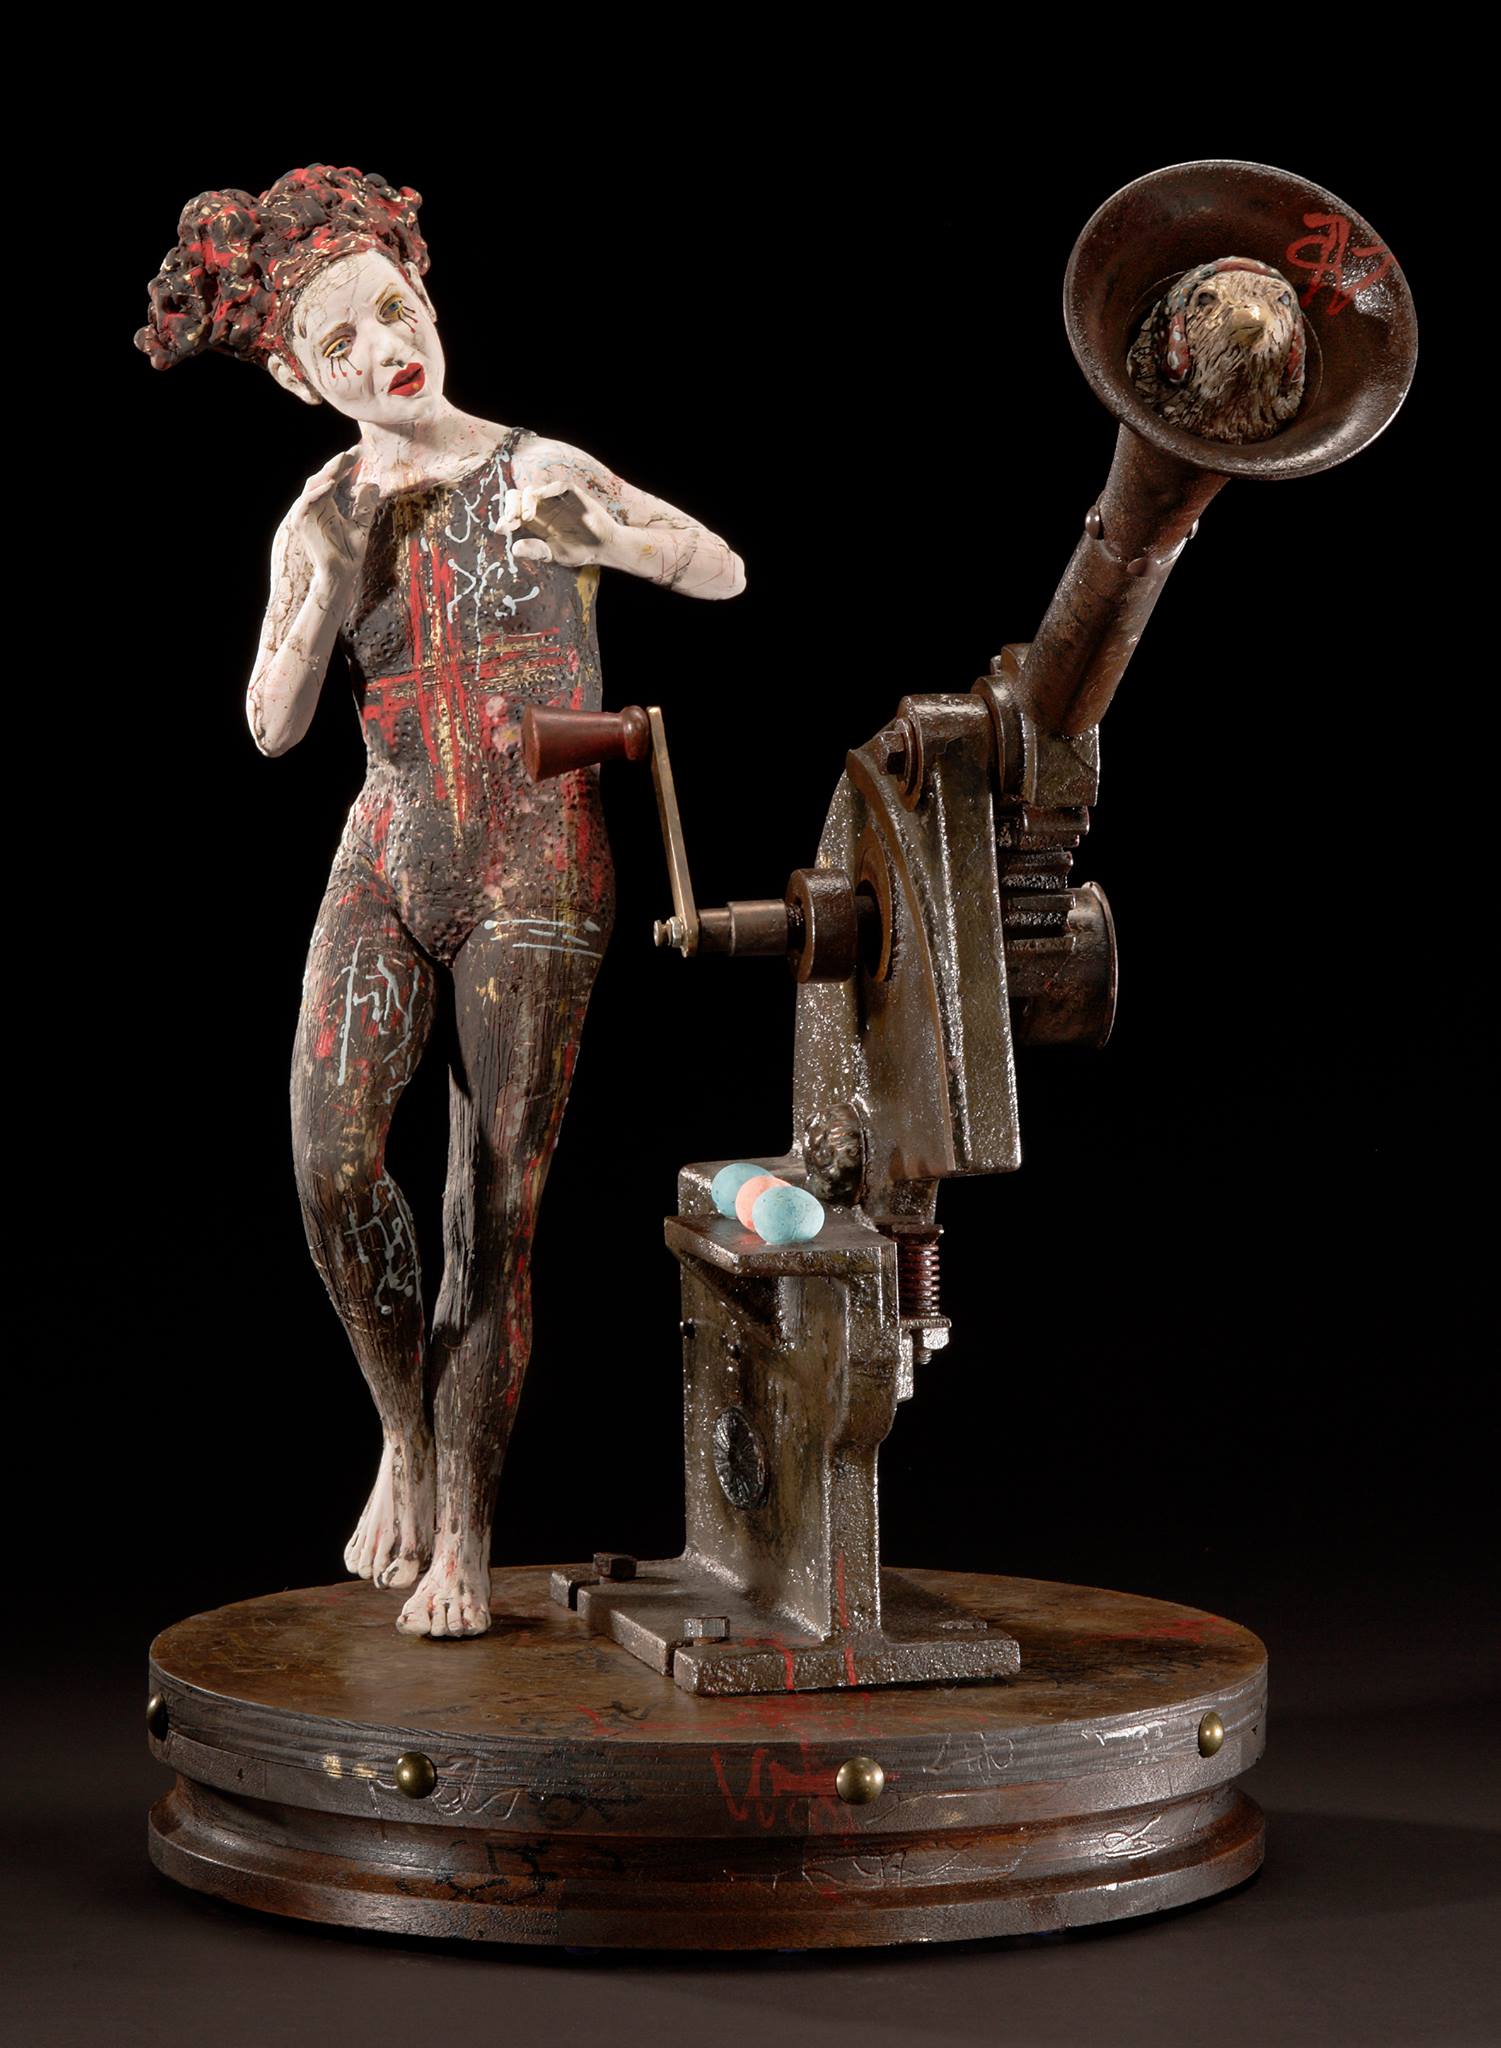 Ceramic : mixed media sculpture by Kirsten Stingle